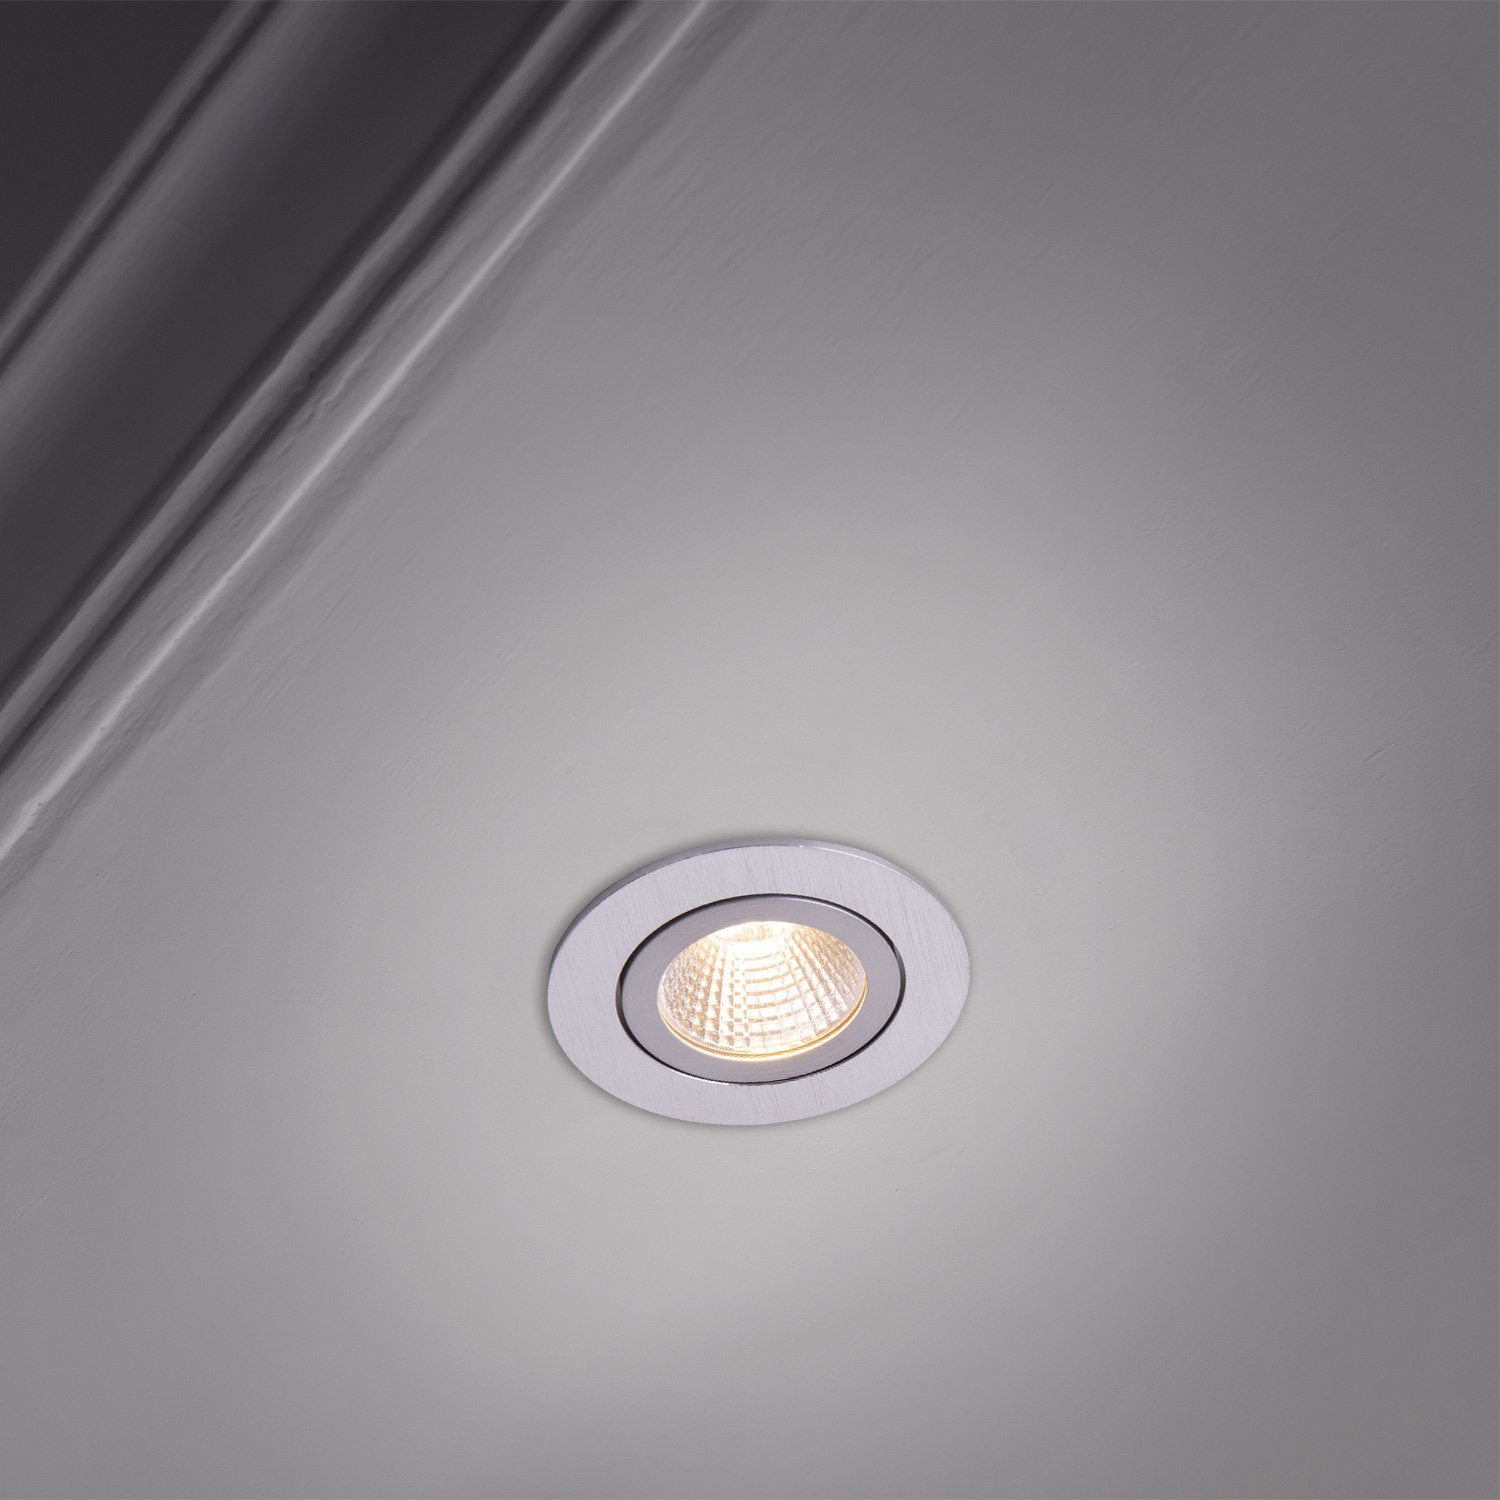 Einbauleuchte LED Rita, Strahler Warmweiß, wechselbar, LED dimmbar Paco Home Flach Schwenkbar Spotlight LED Einbaustrahler